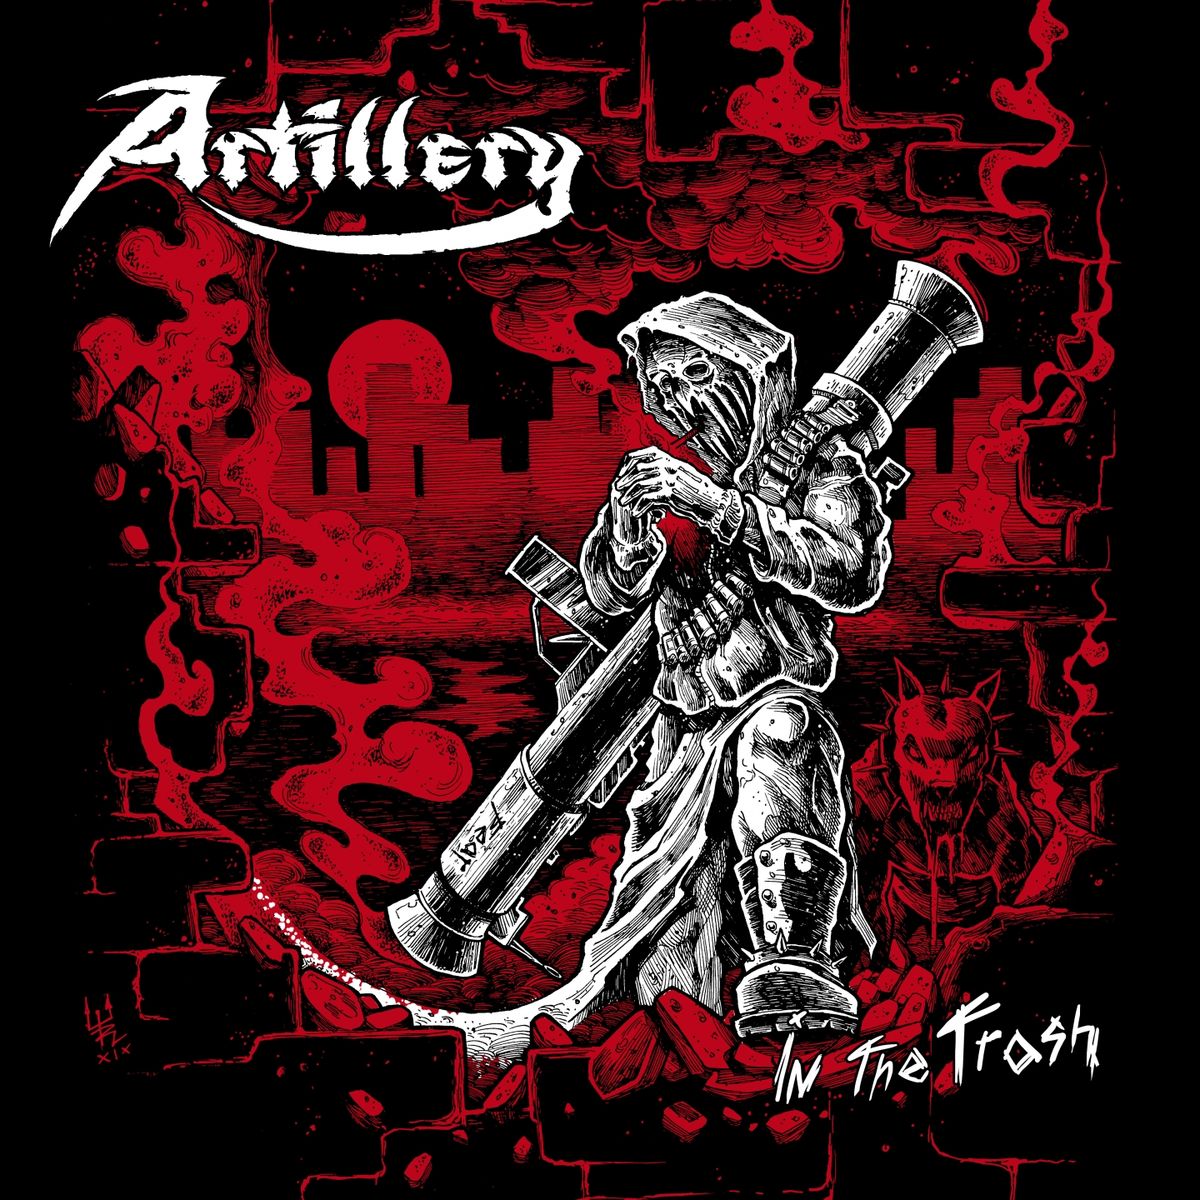 Artillery 2019 - In the Trash